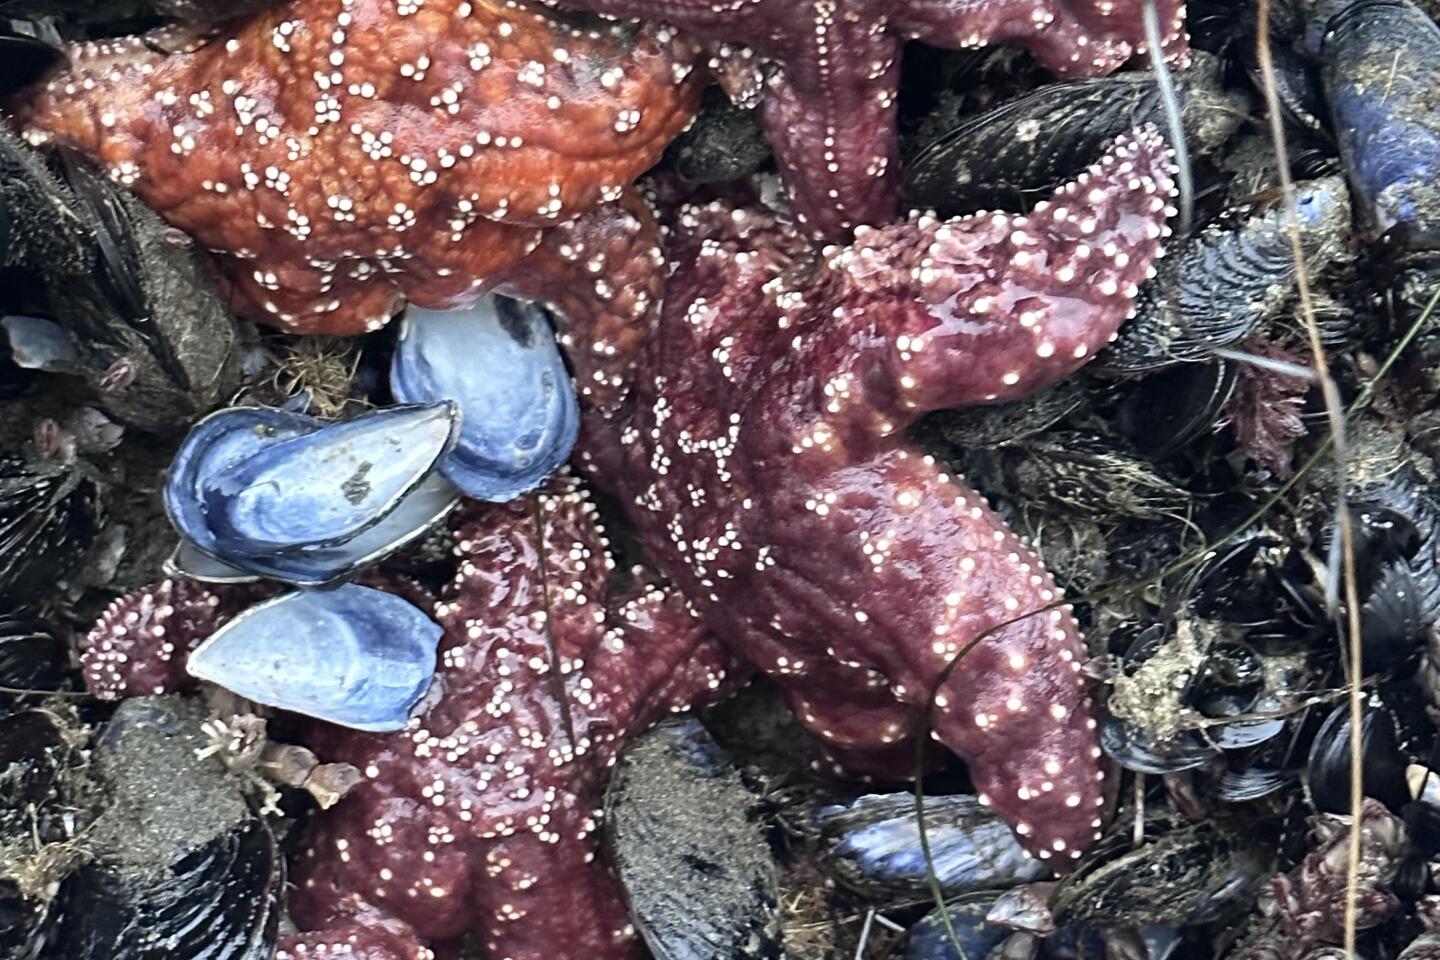 Alan Ackerberg starfish cluster Scripps Pier.jpg